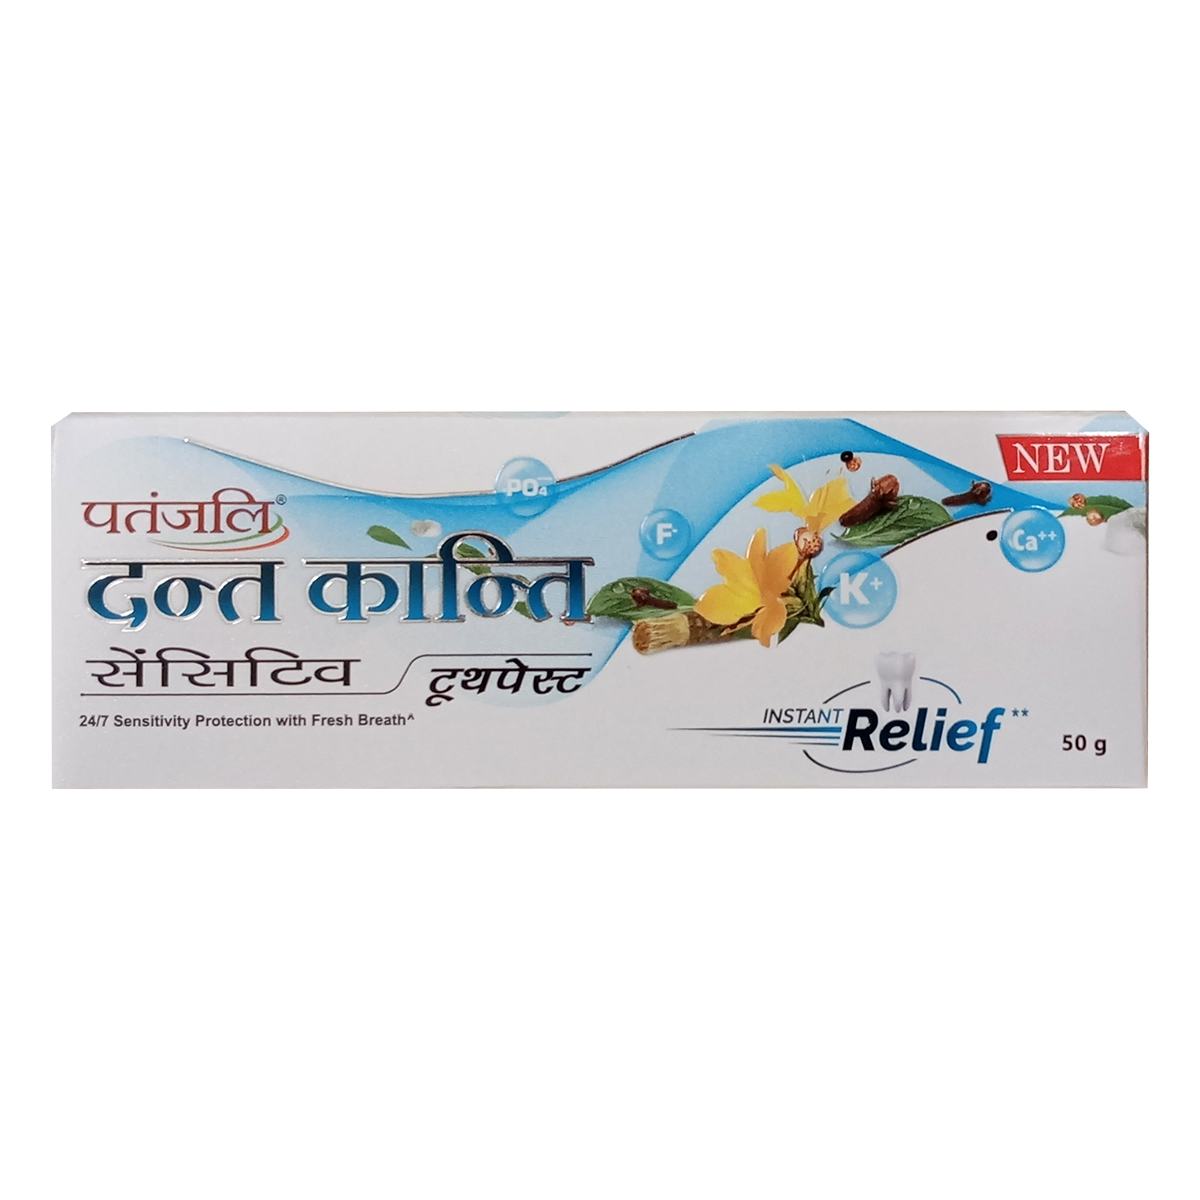 Patanjali Dant Kanti Toothpaste 200 g - Herbal toothpaste Buy Online in ...